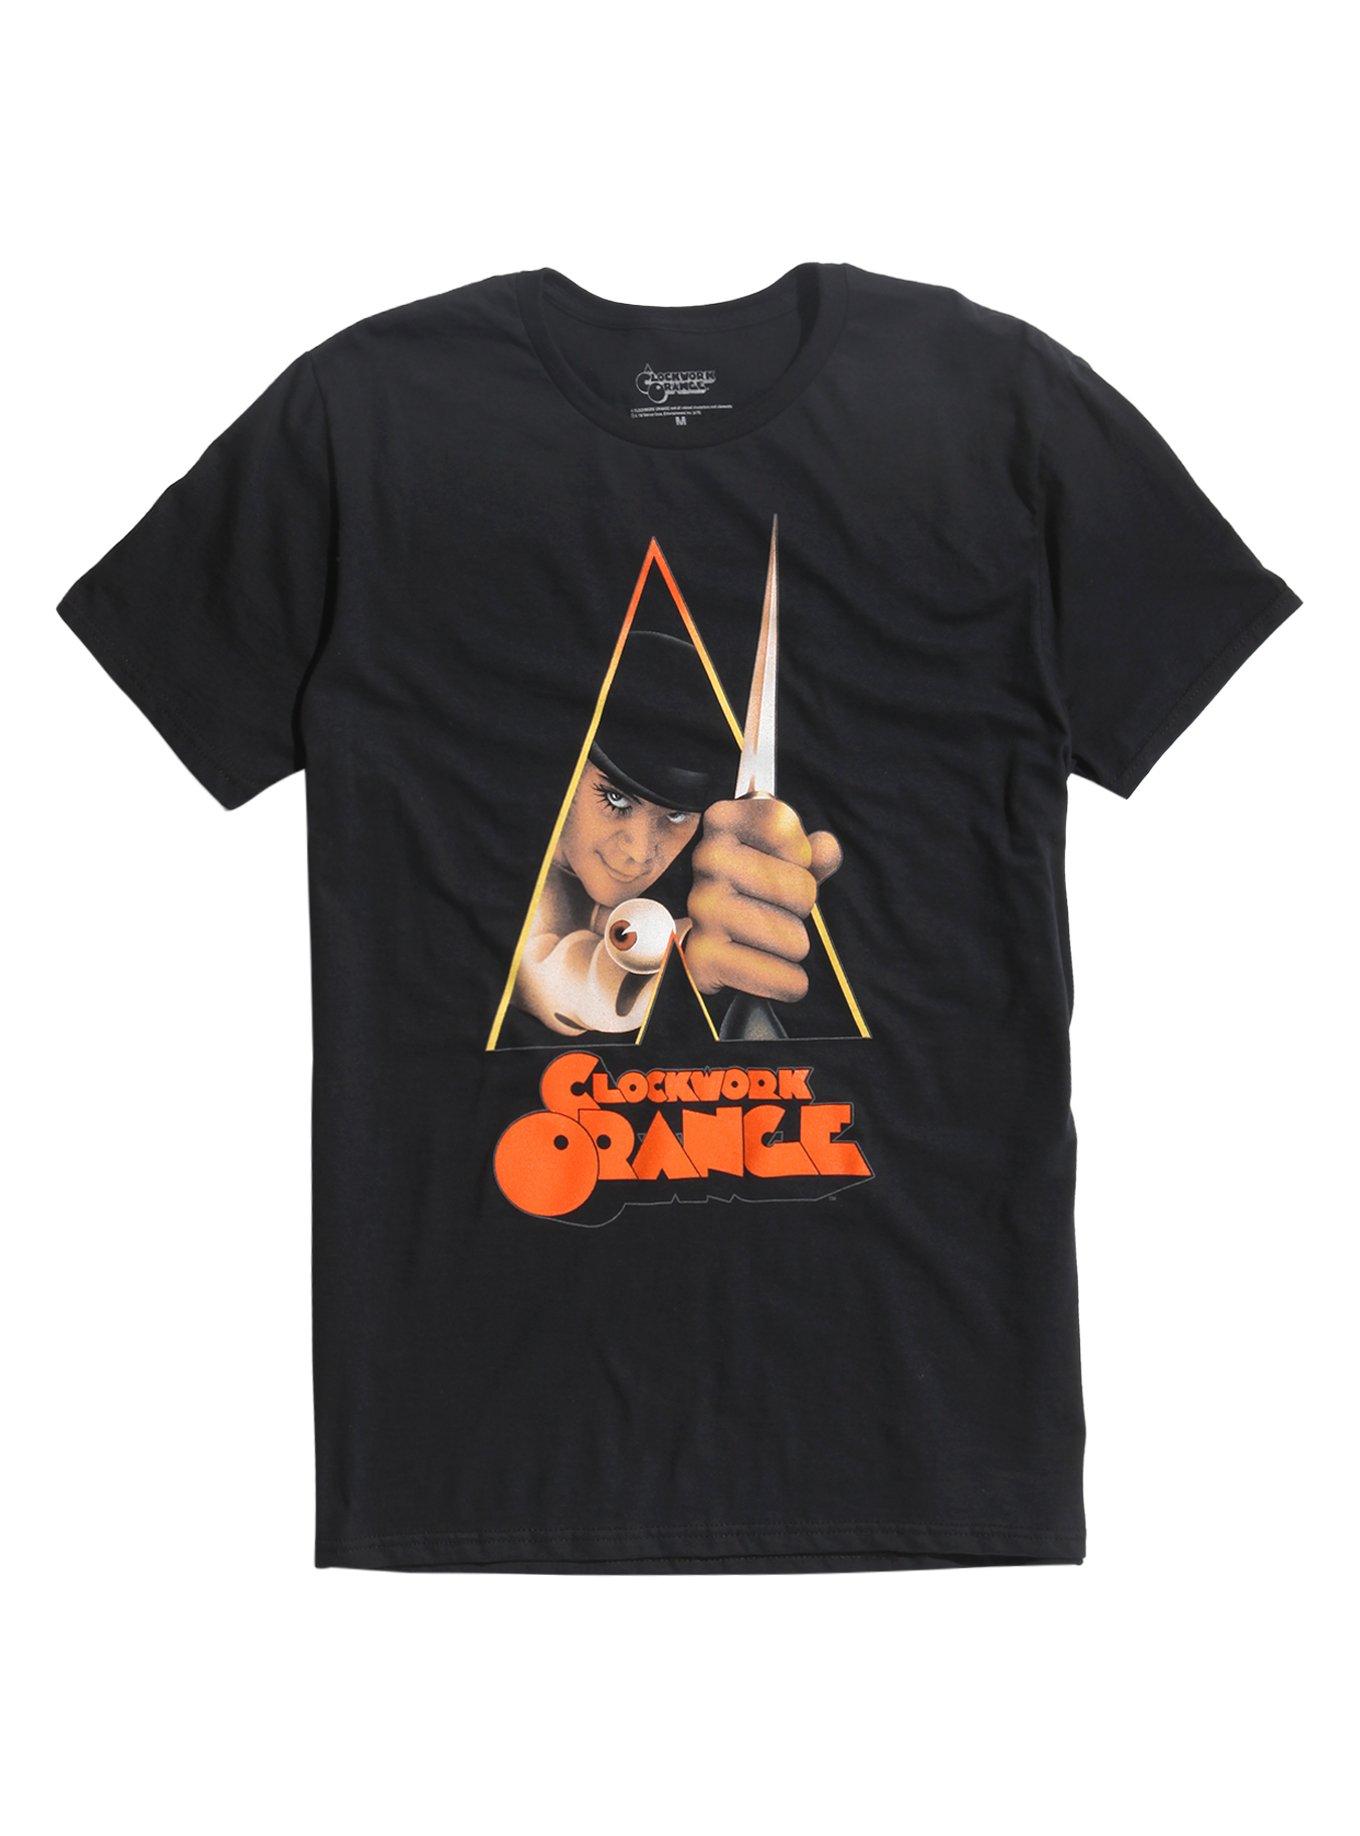 A Clockwork Orange Poster T-Shirt, BLACK, hi-res